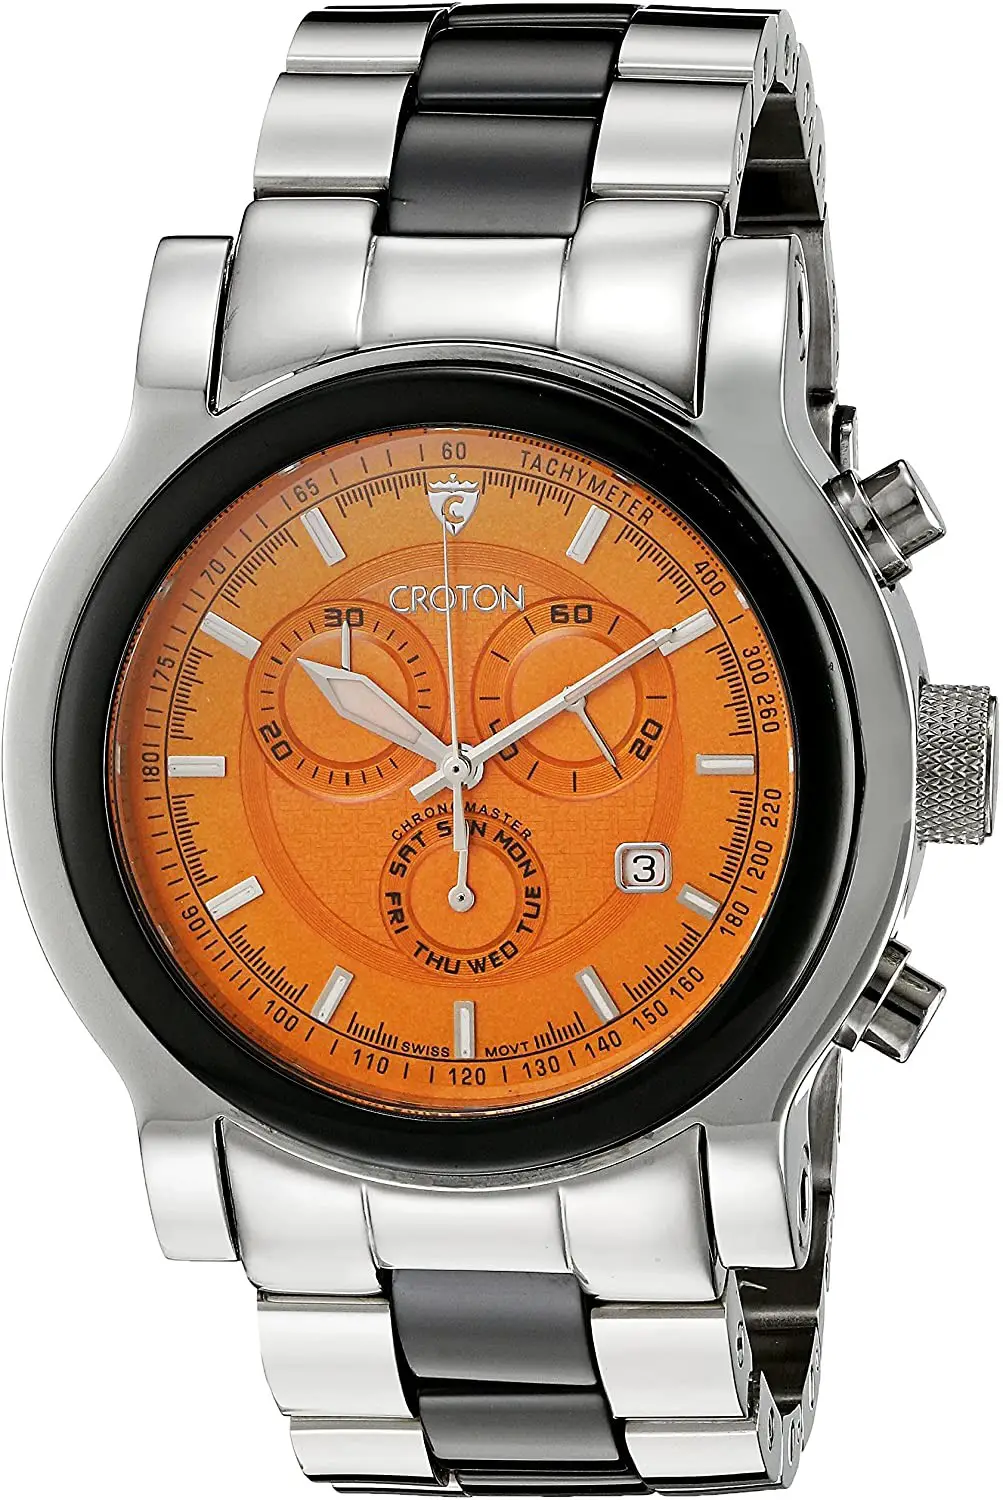  Fanmis “Reginald” Rotatable Bezel Luxury Quartz Watch